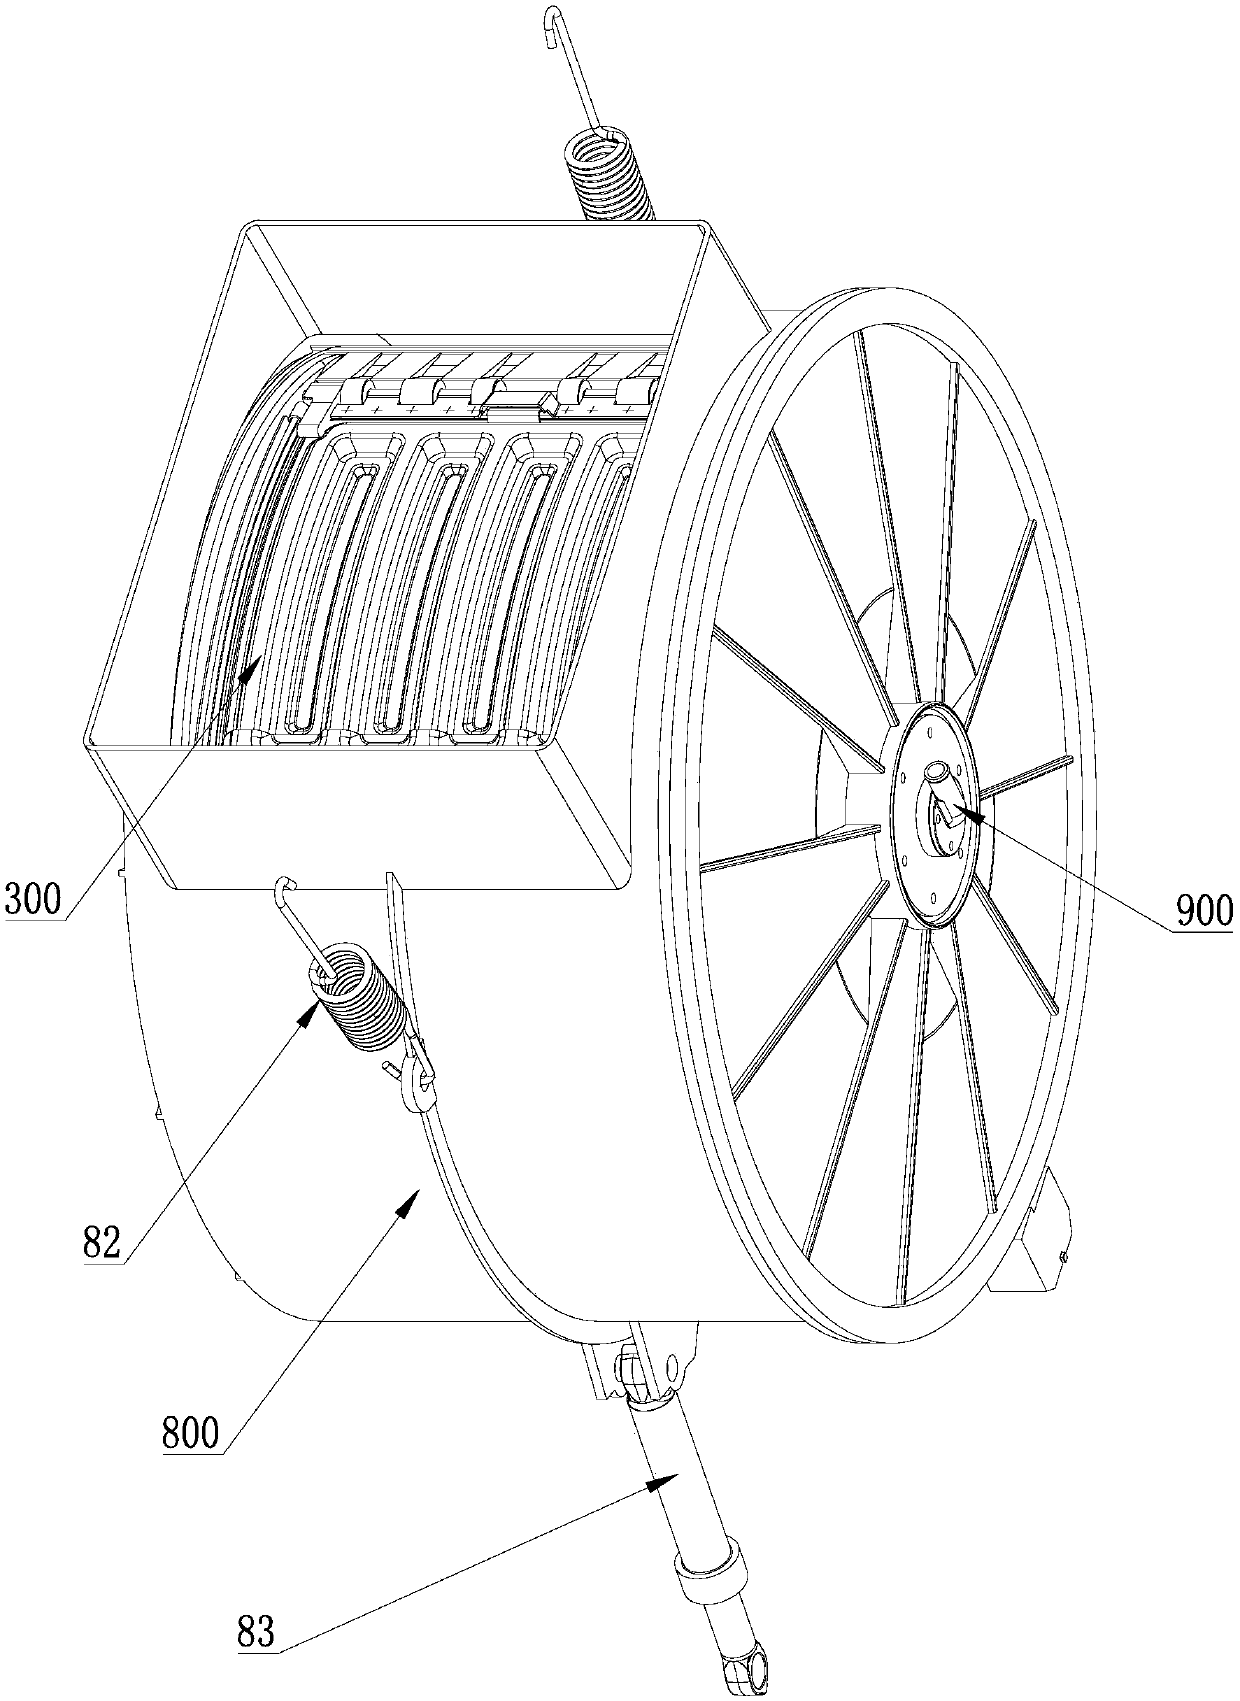 Breather valve applied to non-porous drum and drum washing machine